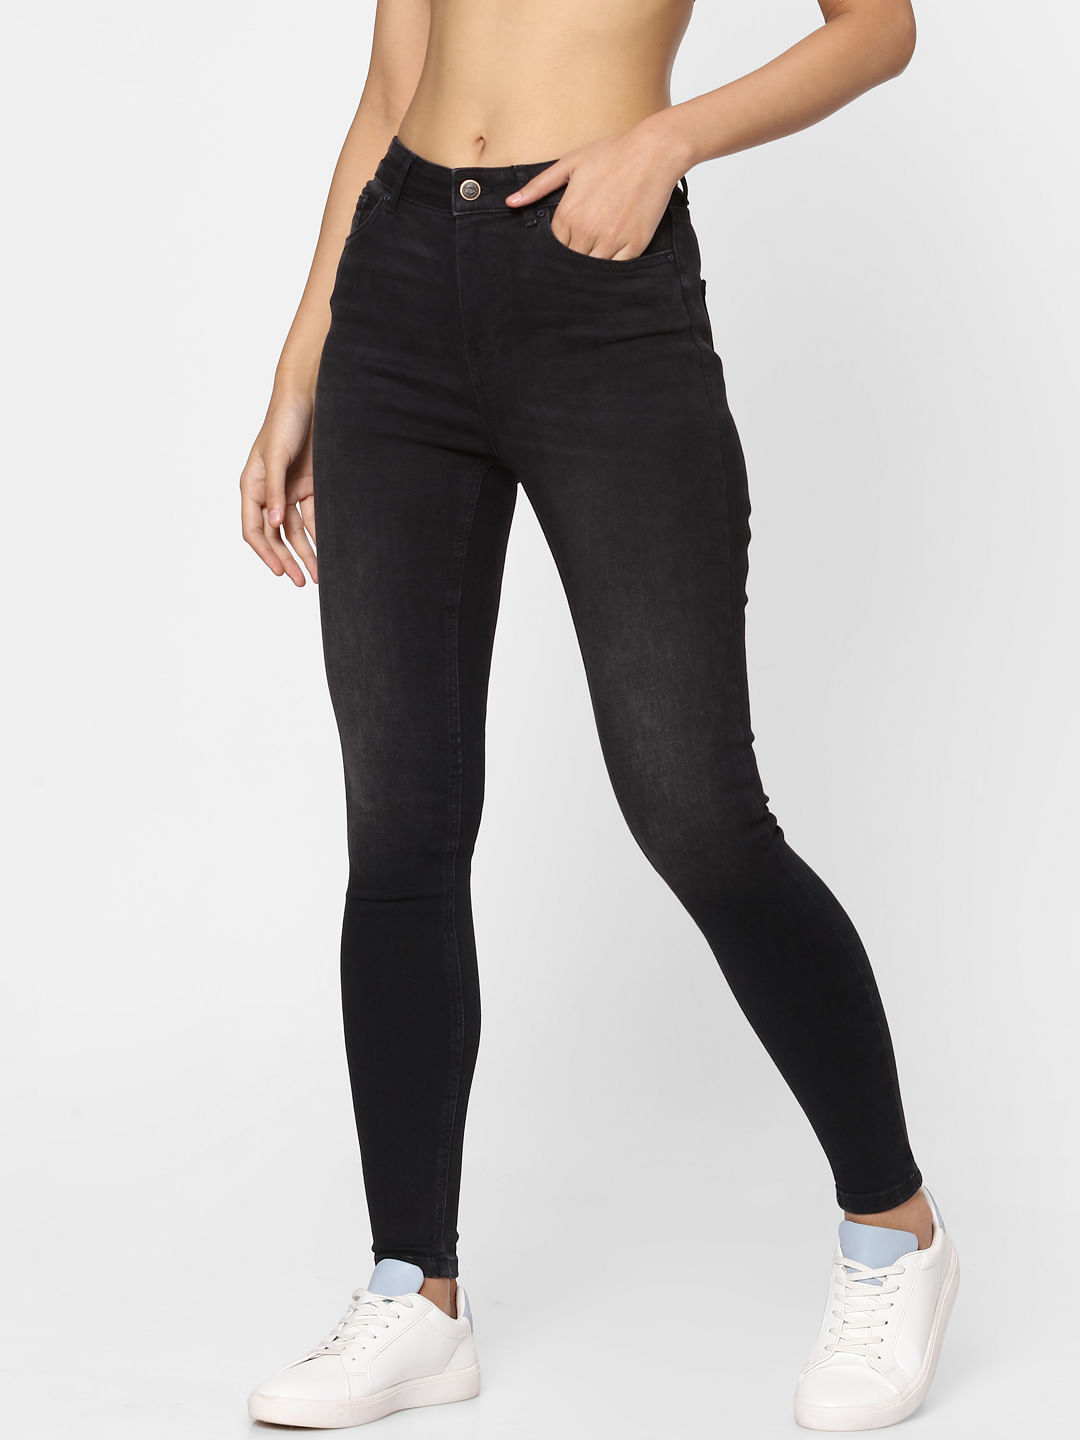 Buy Black Jeans  Jeggings for Women by ONLY Online  Ajiocom